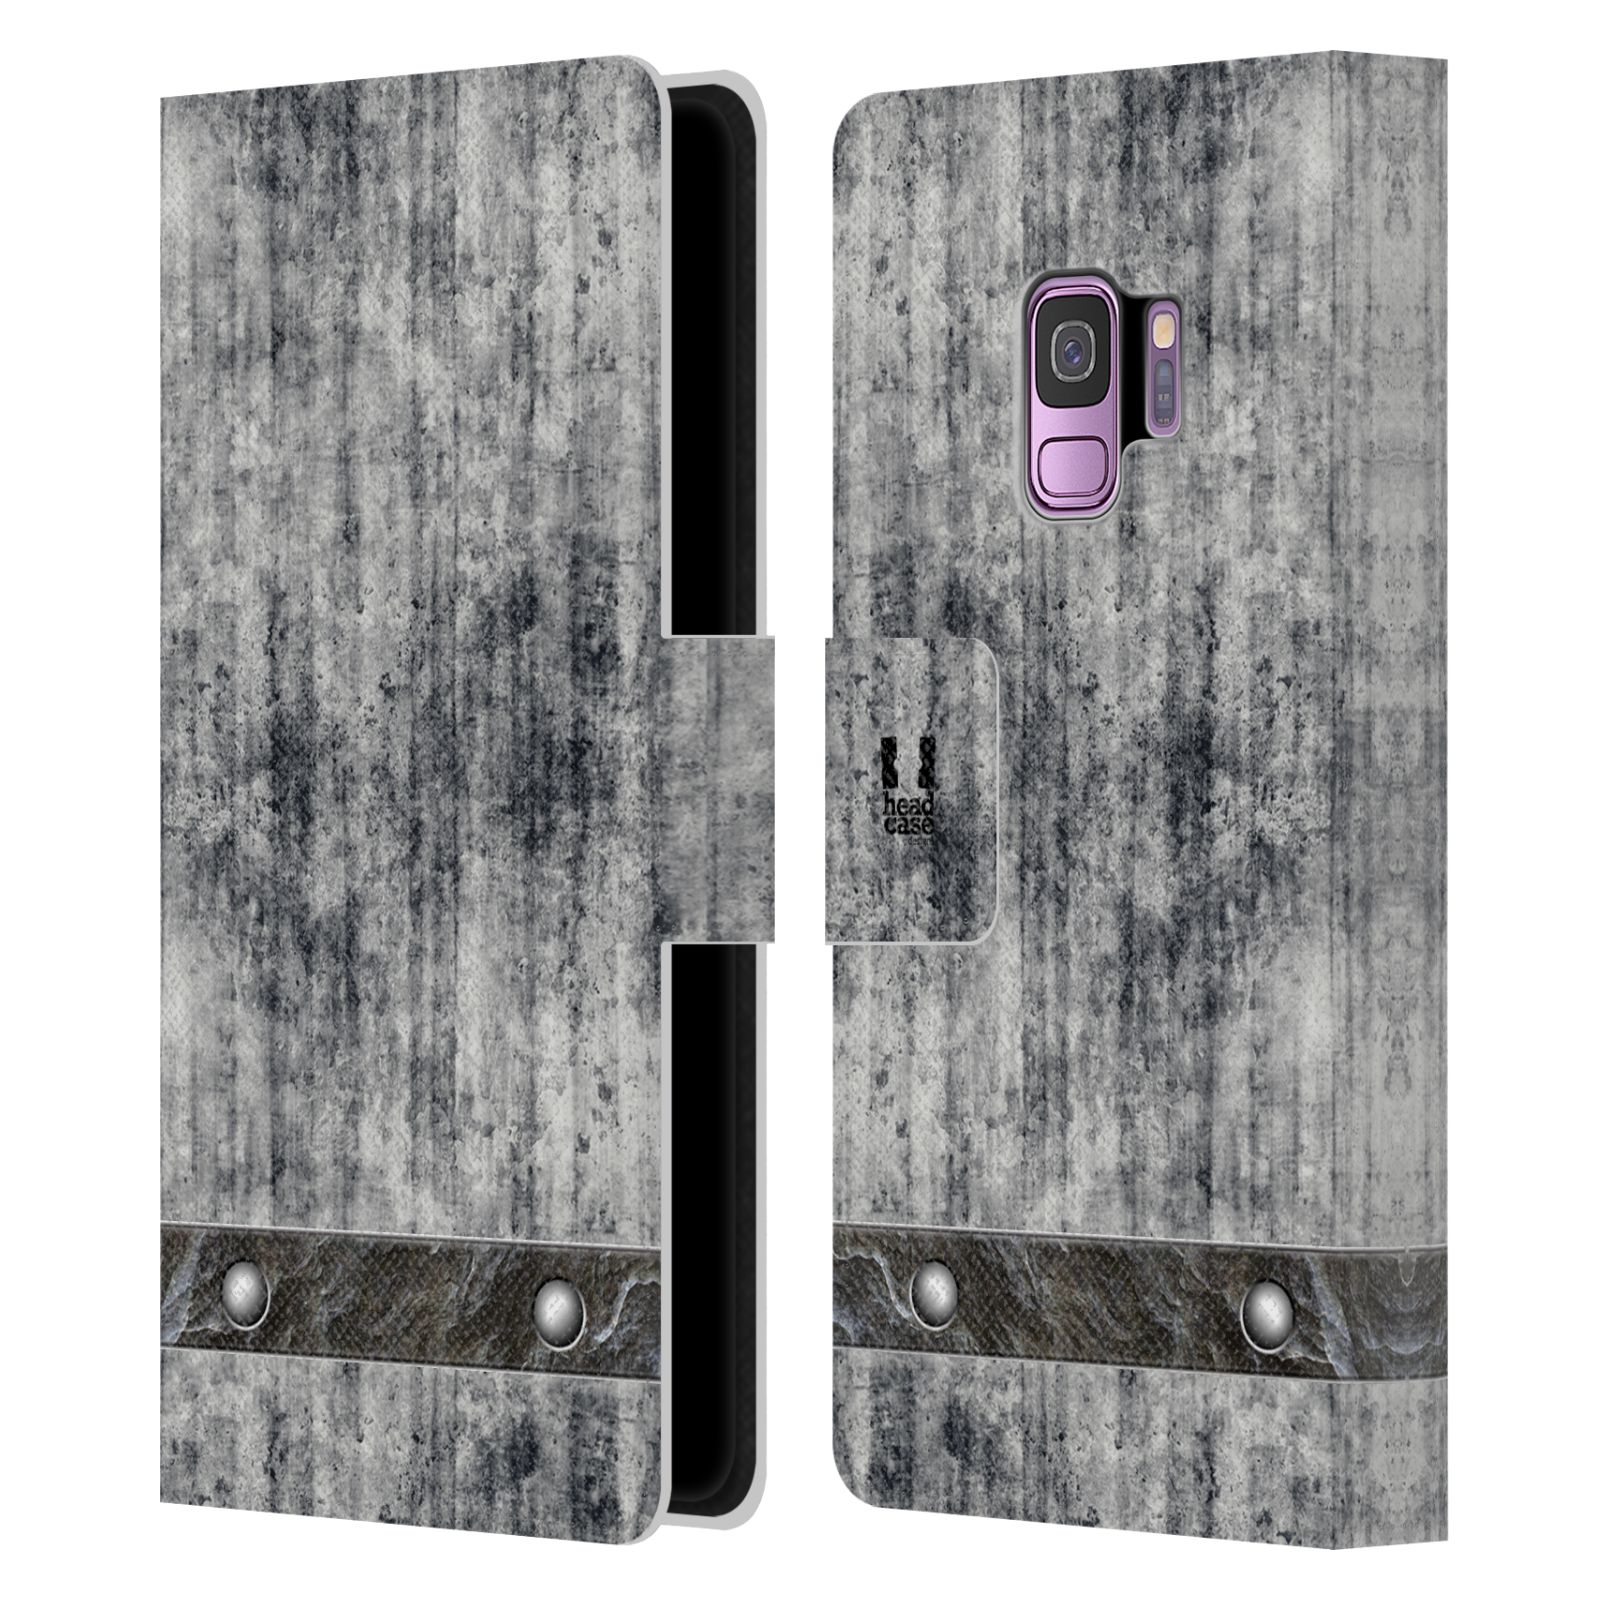 Pouzdro pro mobil Samsung Galaxy S9 - Stavební textura šedý beton